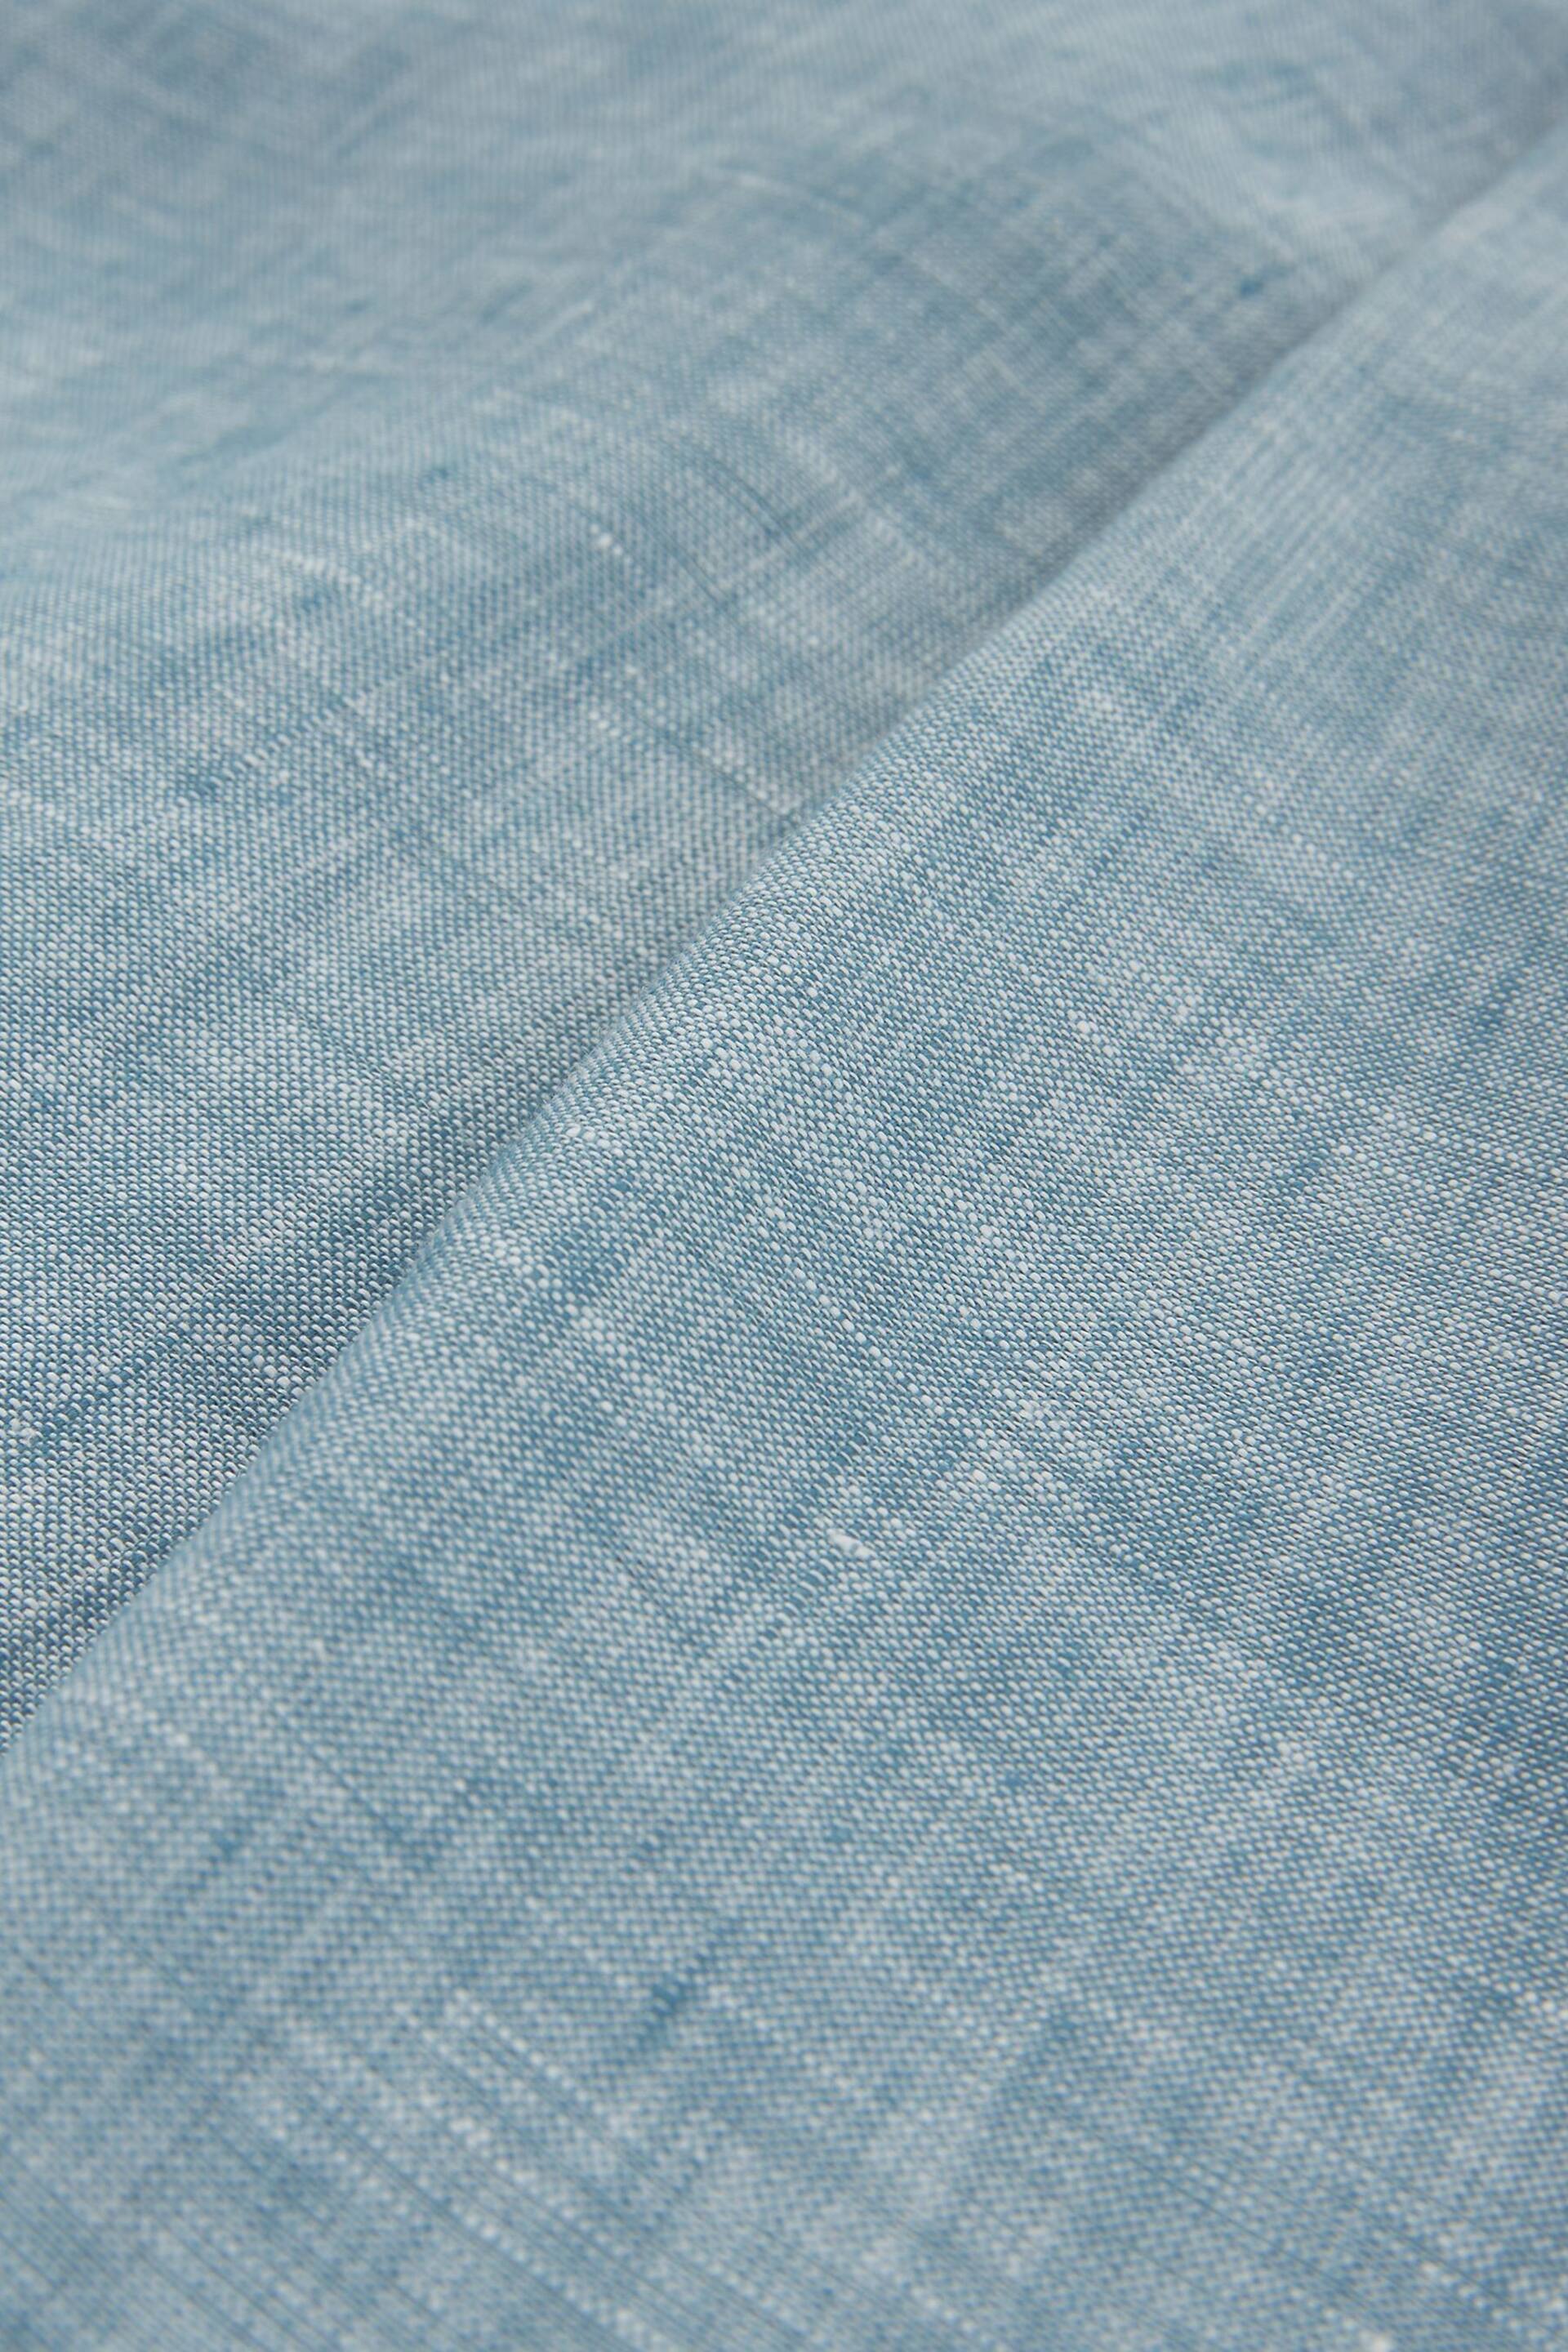 Celtic & Co. Blue Linen Sleeveless Blouse - Image 7 of 7